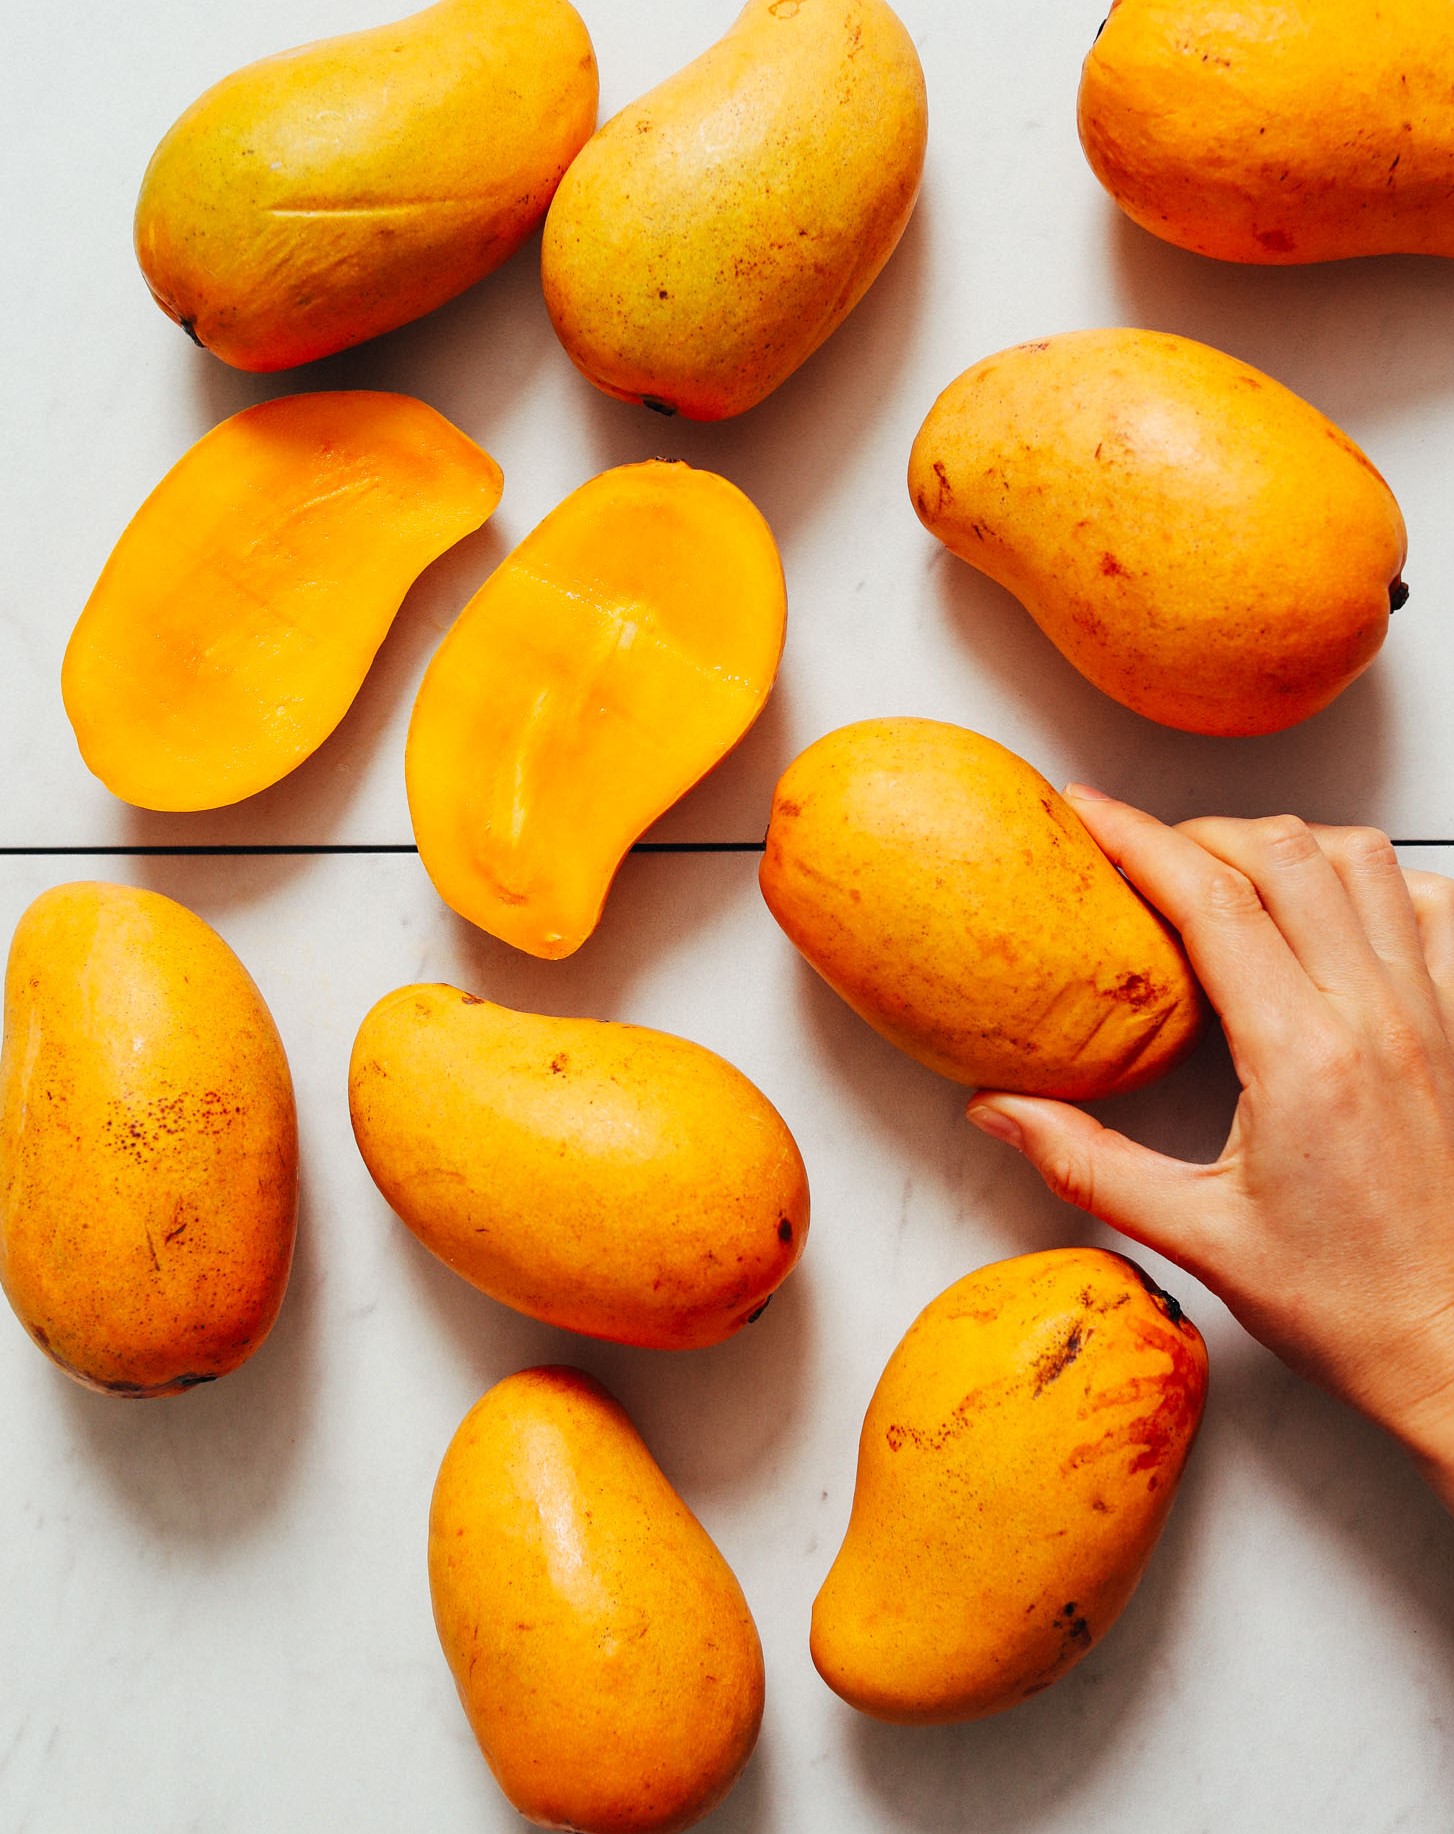 CREAMY-Mango-Lassi-Smoothie-5-ingredients-5-minutes-SO-delicious-mango ...